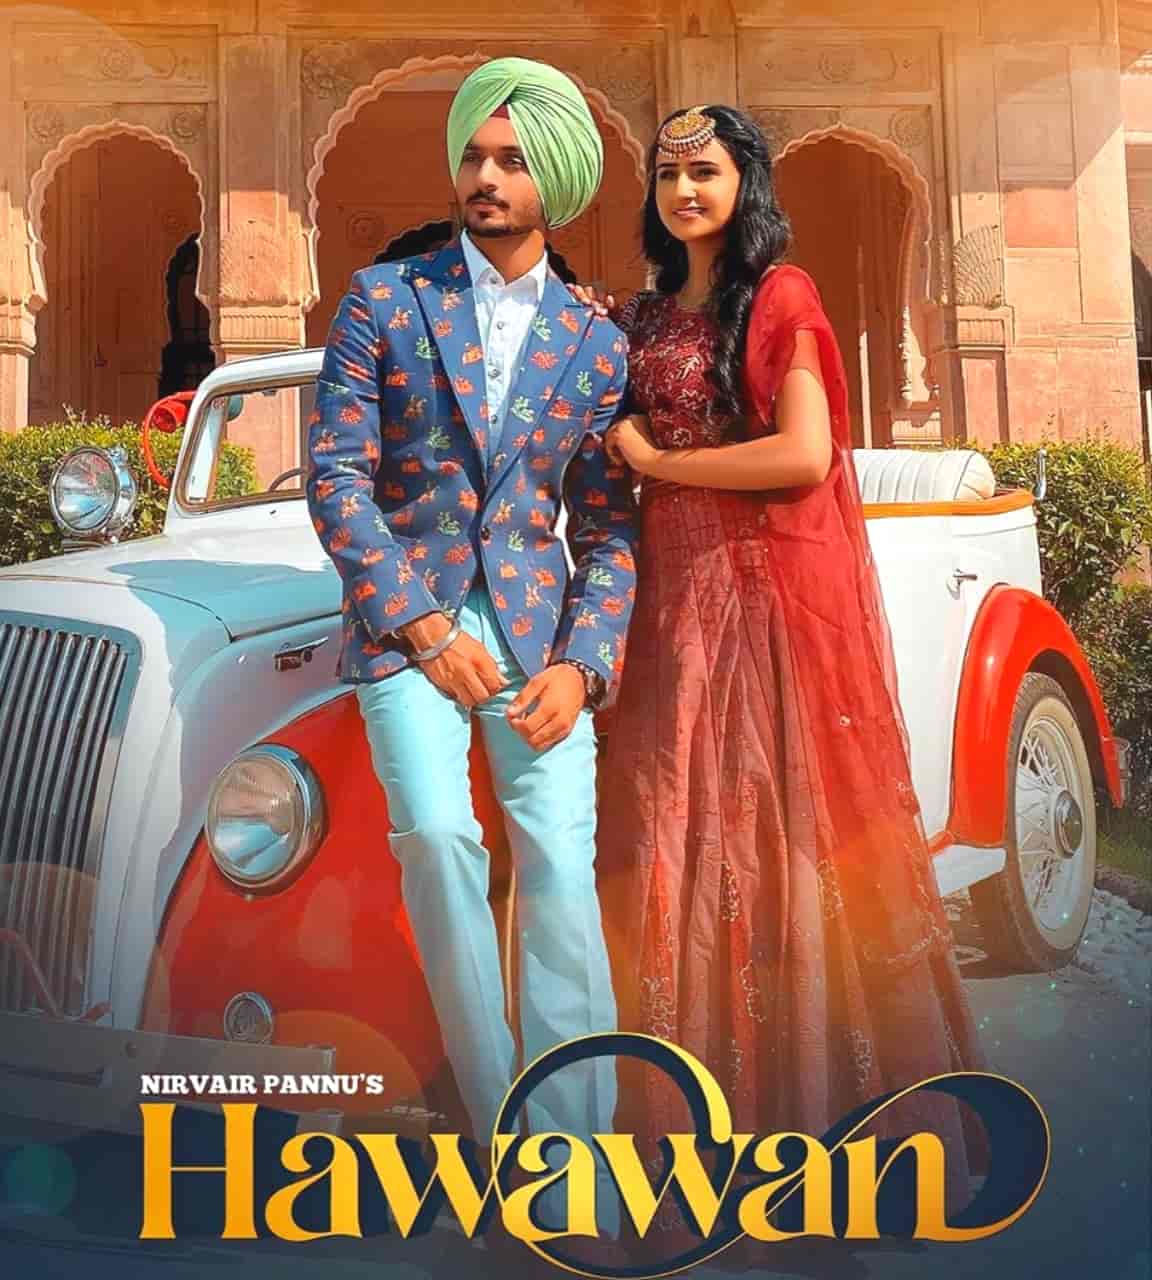 Hawawan Punjabi Song Image Features Nirvair Pannu.